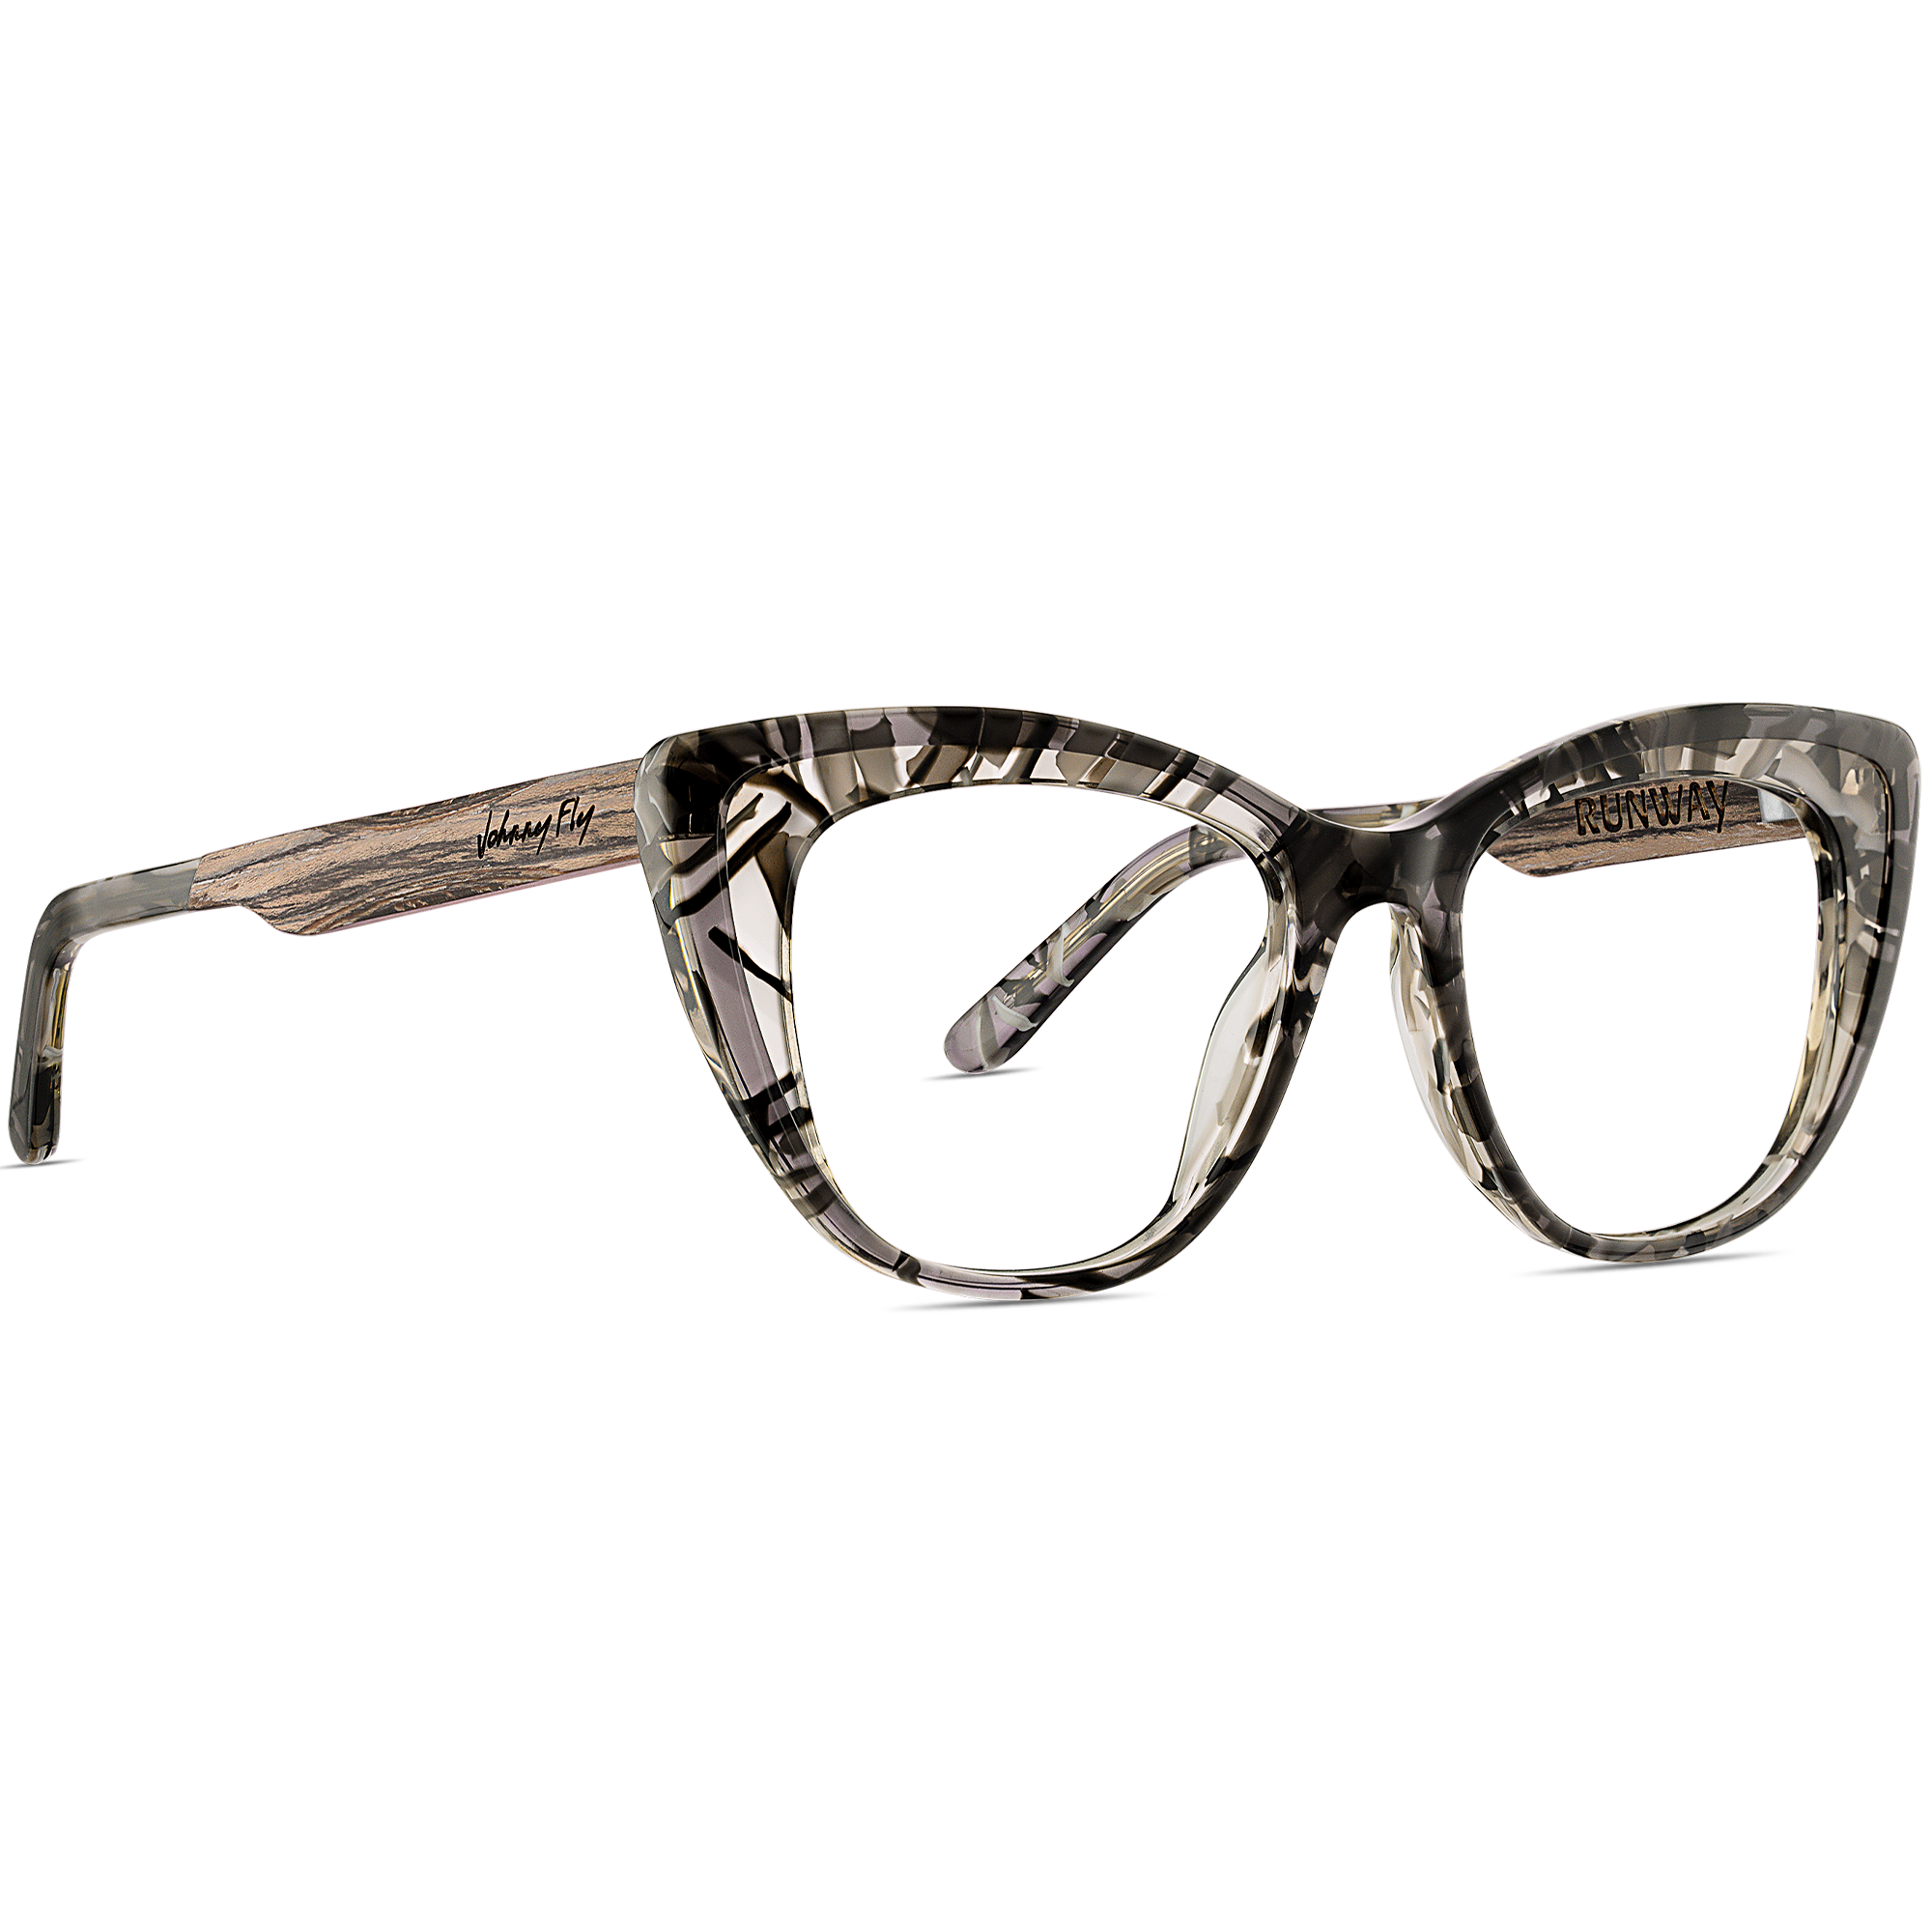 RUNWAY - Shattered Smoke - eyeglasses / Sunglasses - Johnny Fly Eyewear 